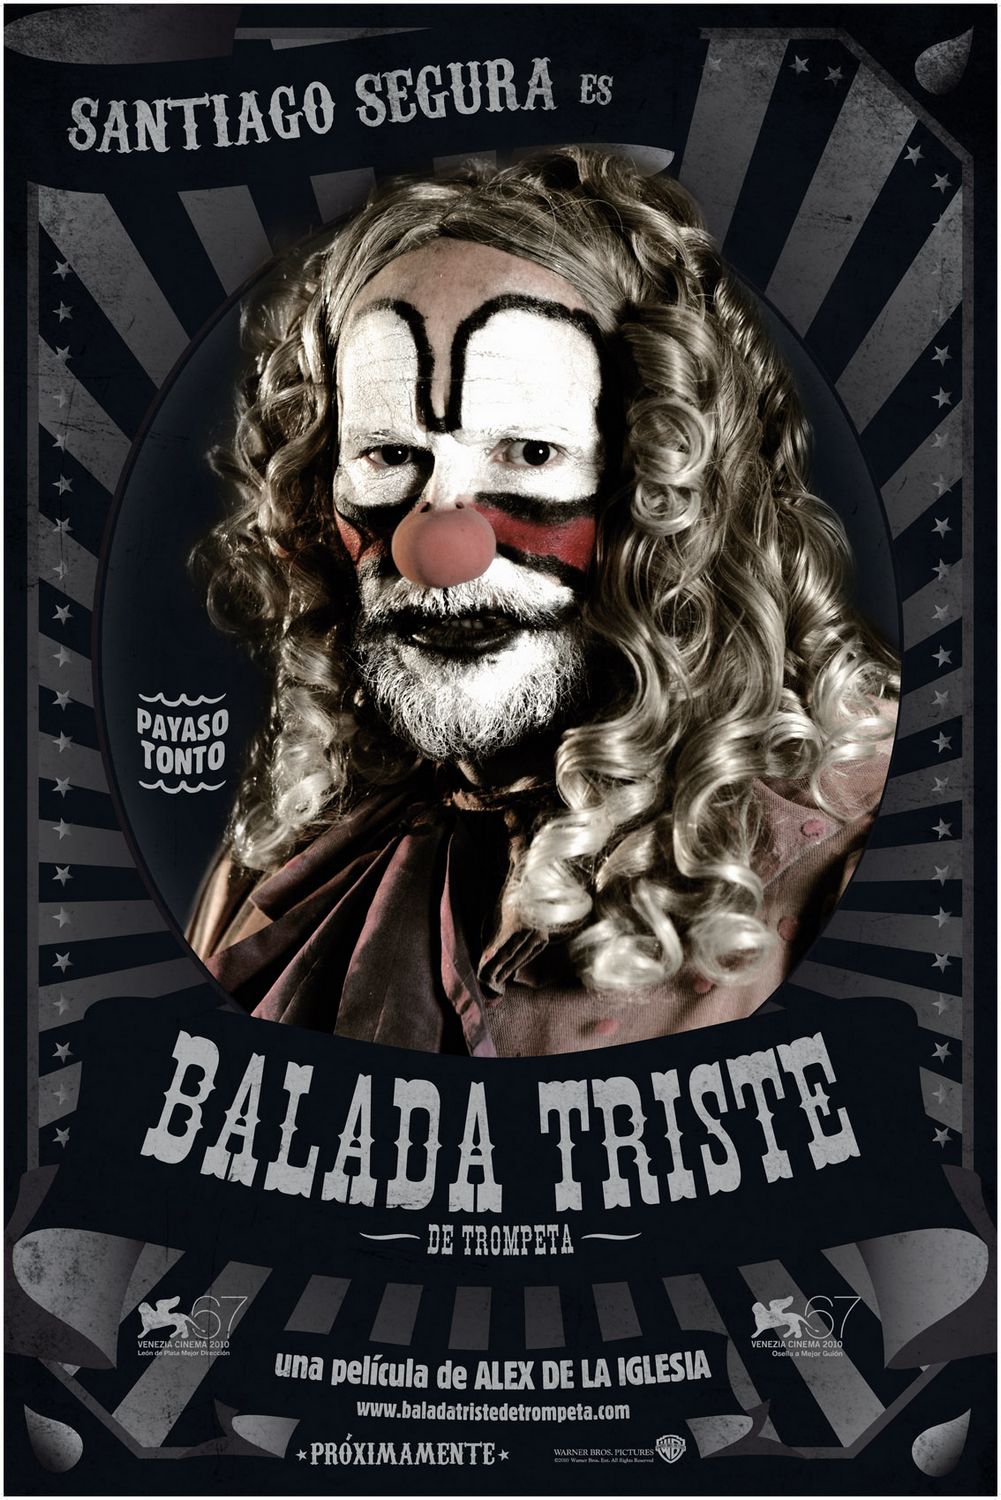 Extra Large Movie Poster Image for Balada triste de trompeta (#4 of 9)